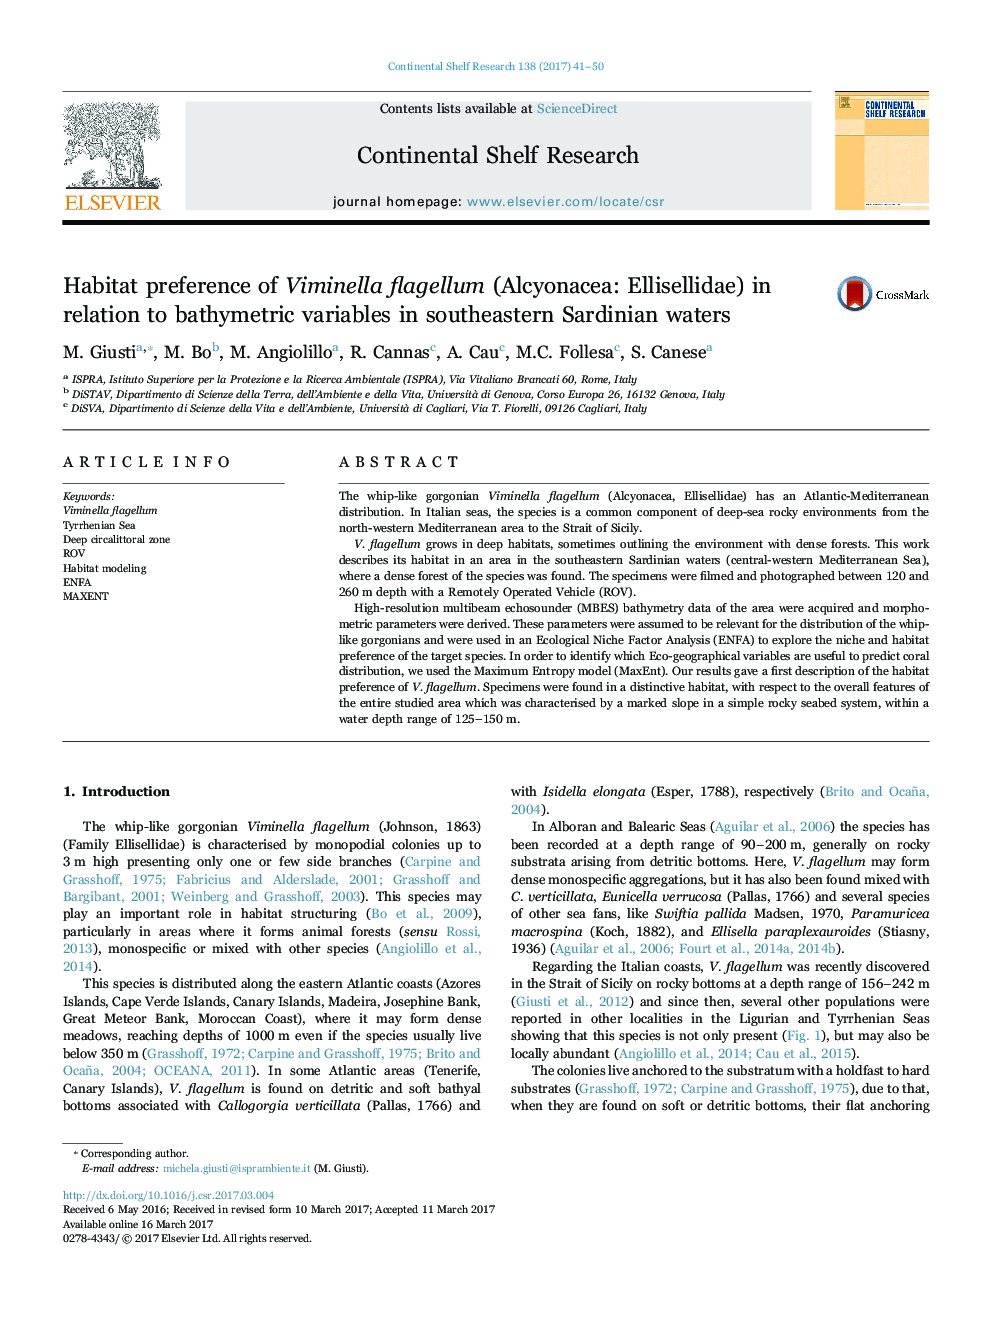 Habitat preference of Viminella flagellum (Alcyonacea: Ellisellidae) in relation to bathymetric variables in southeastern Sardinian waters